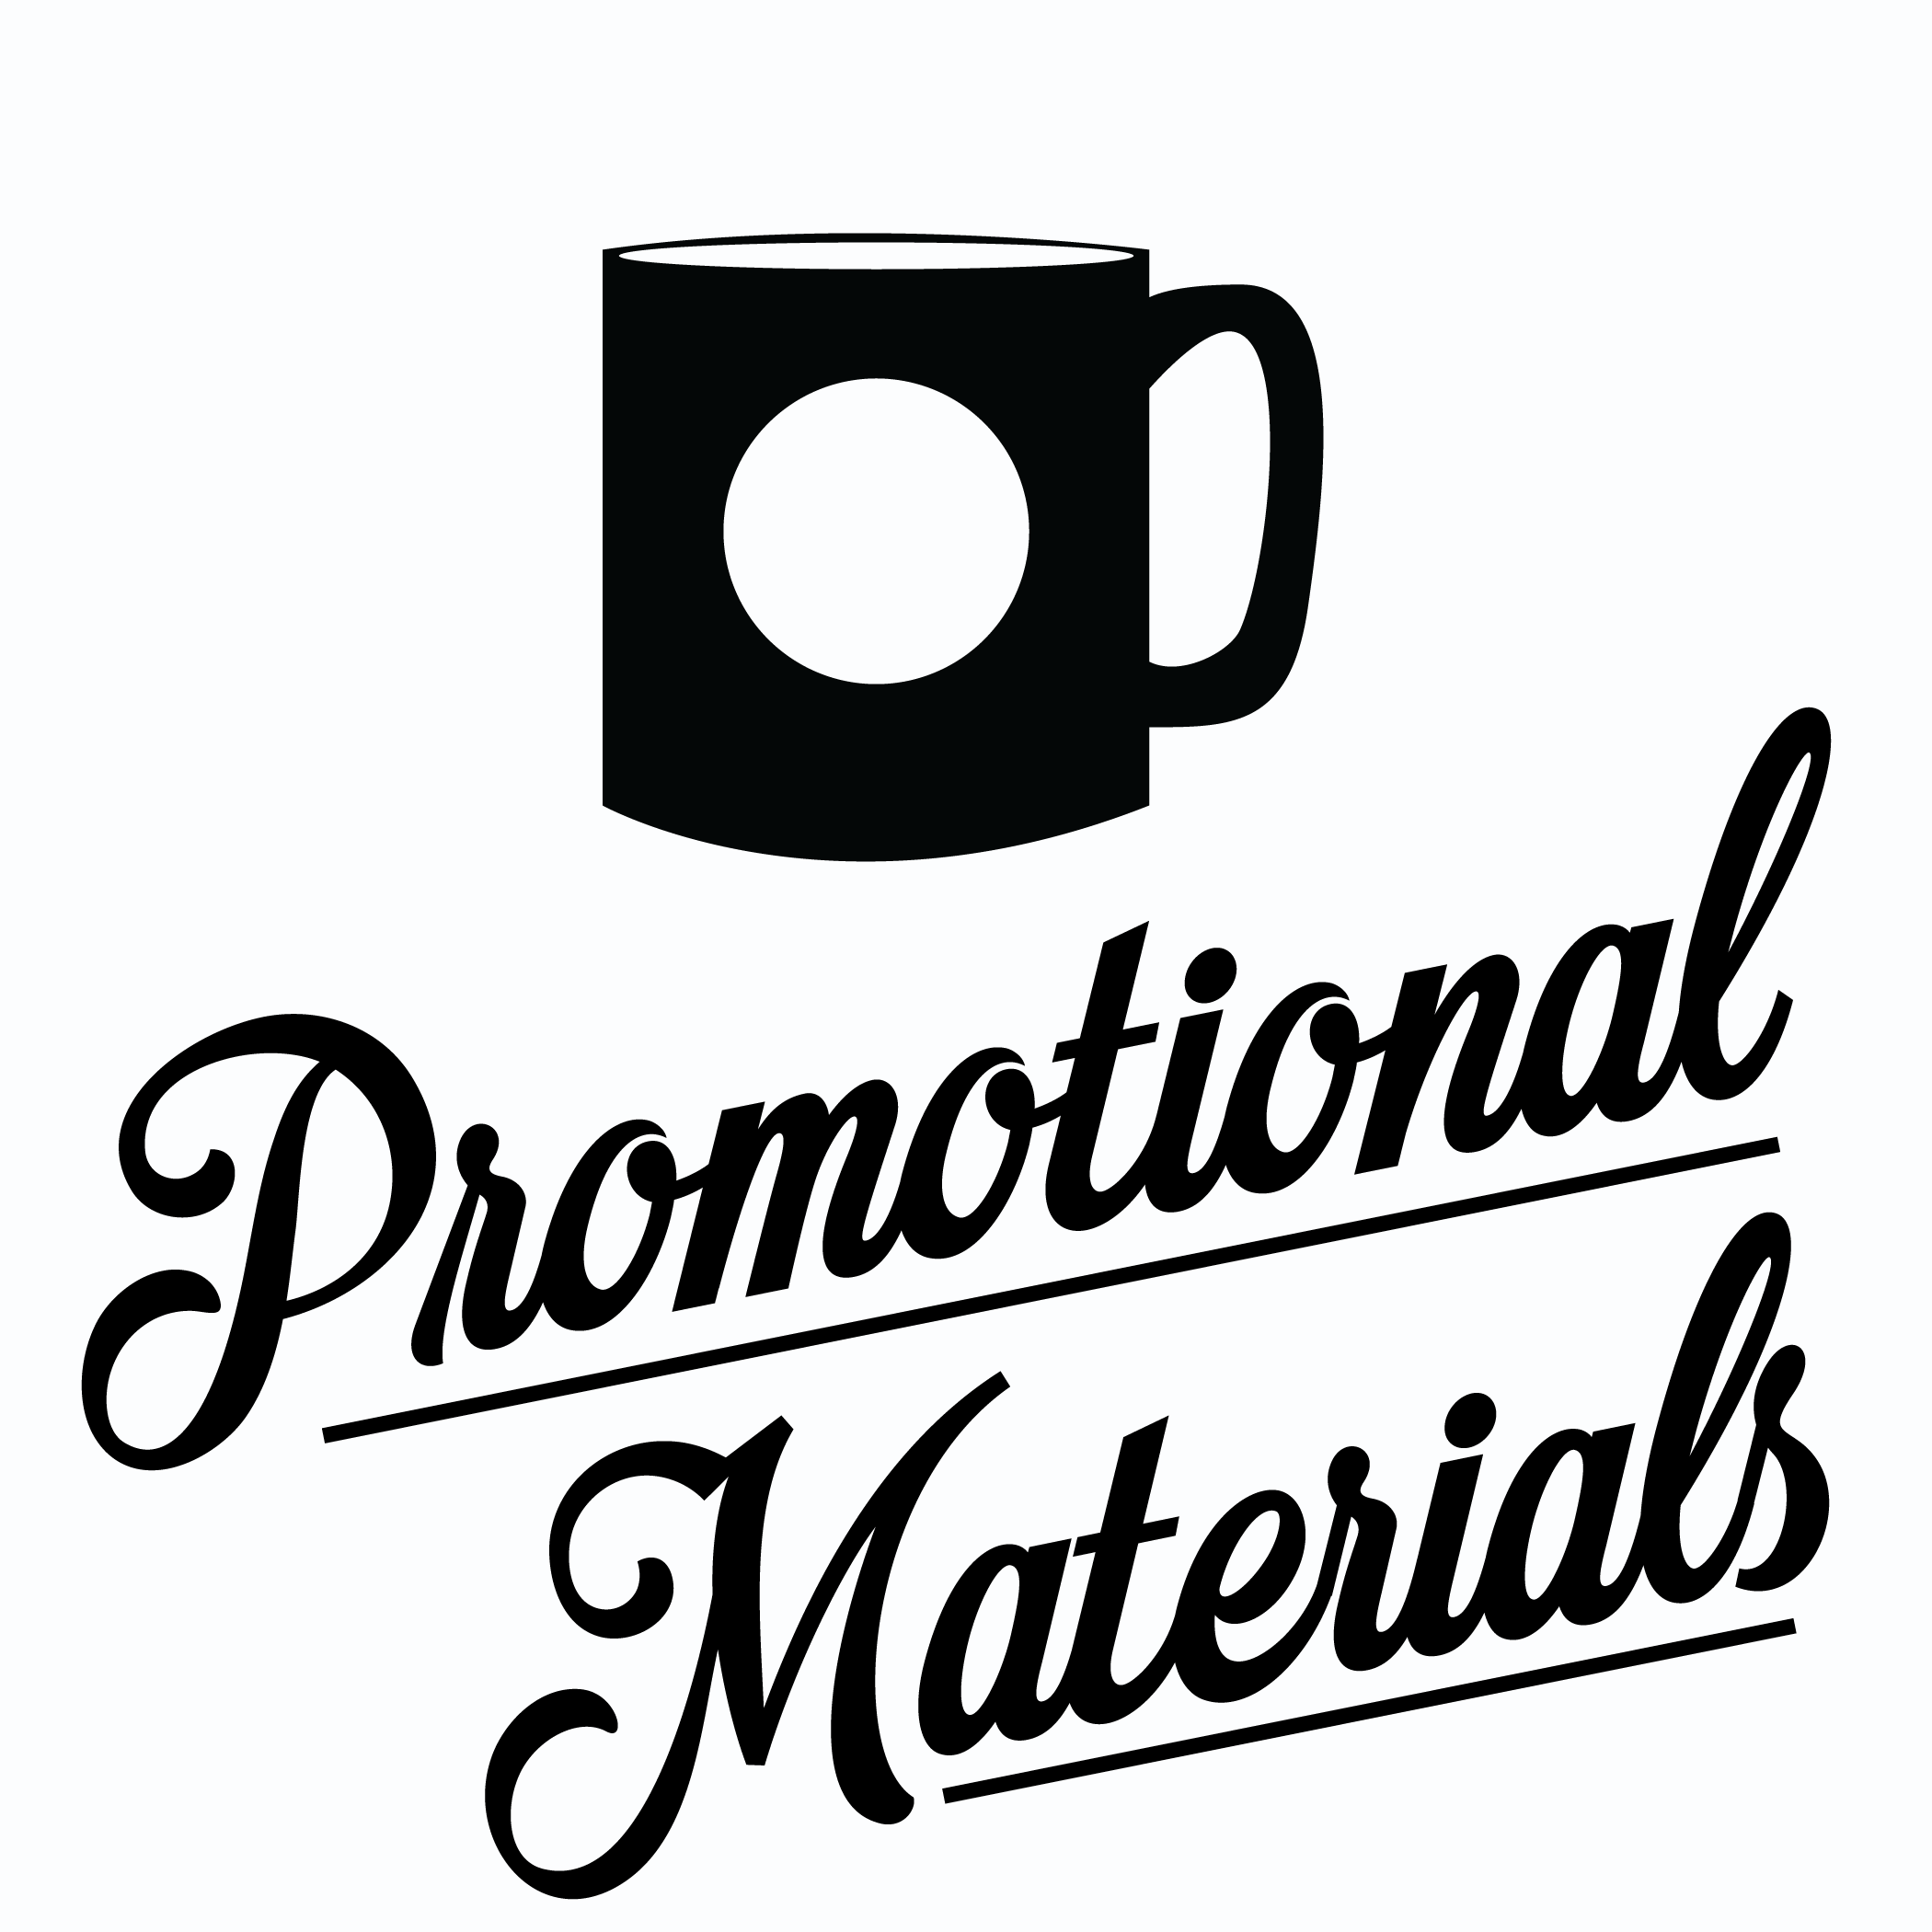 A mug representing Promotional Materials